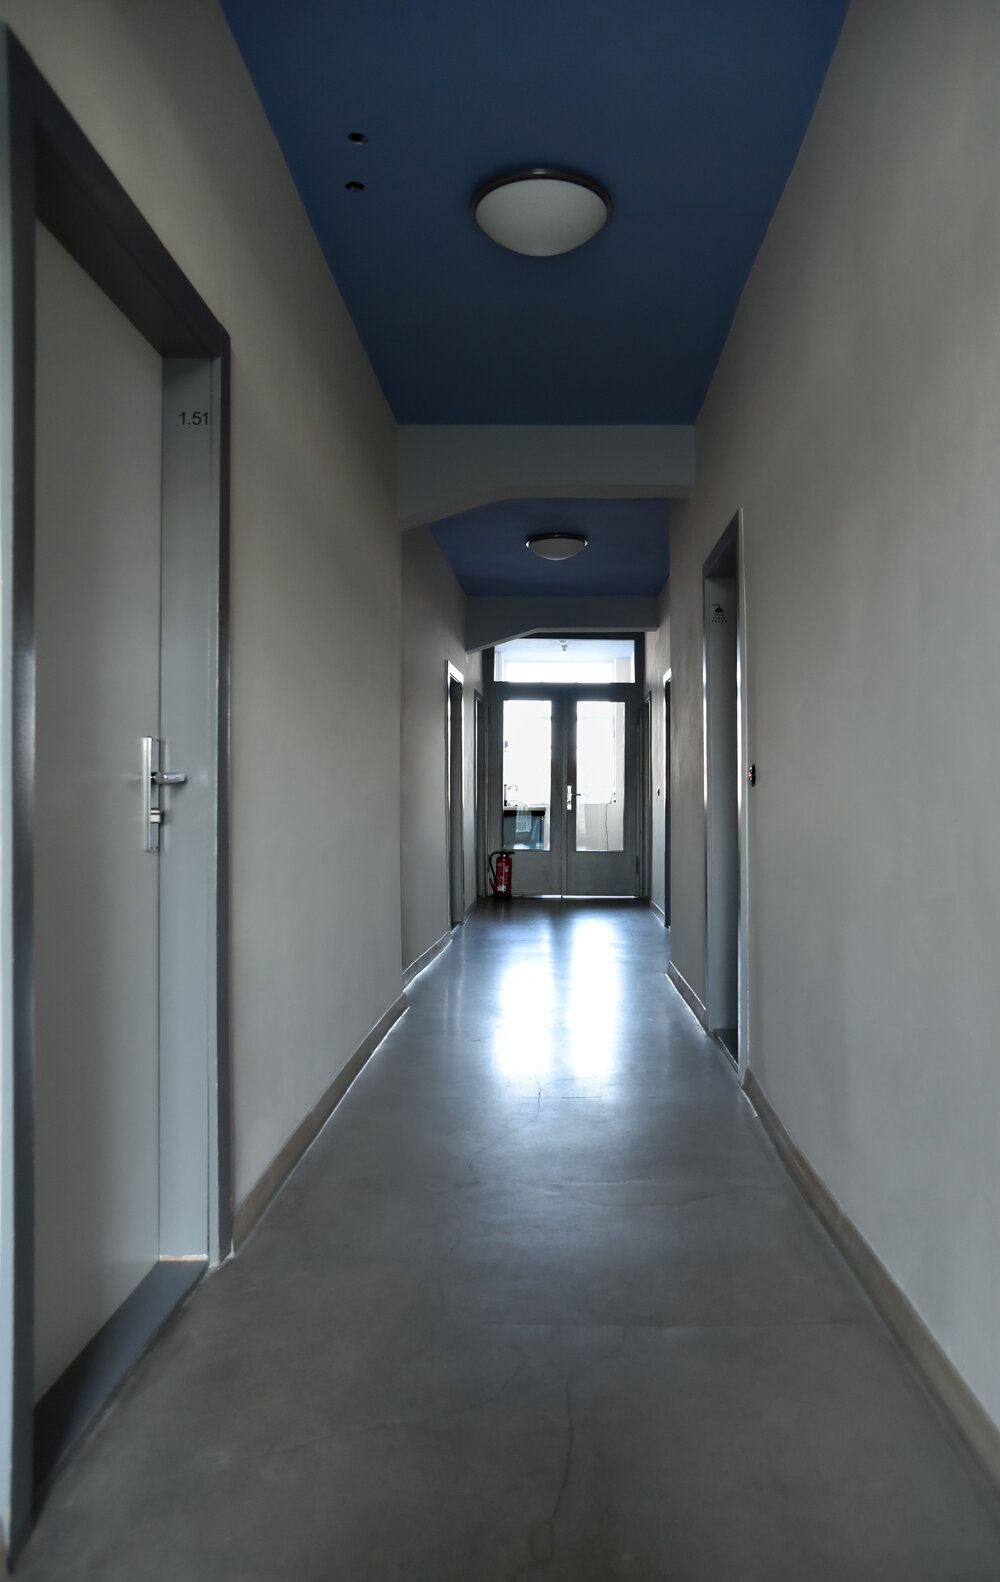 Bauhaus Dessau studio residence corridor towards shared kitchenette.